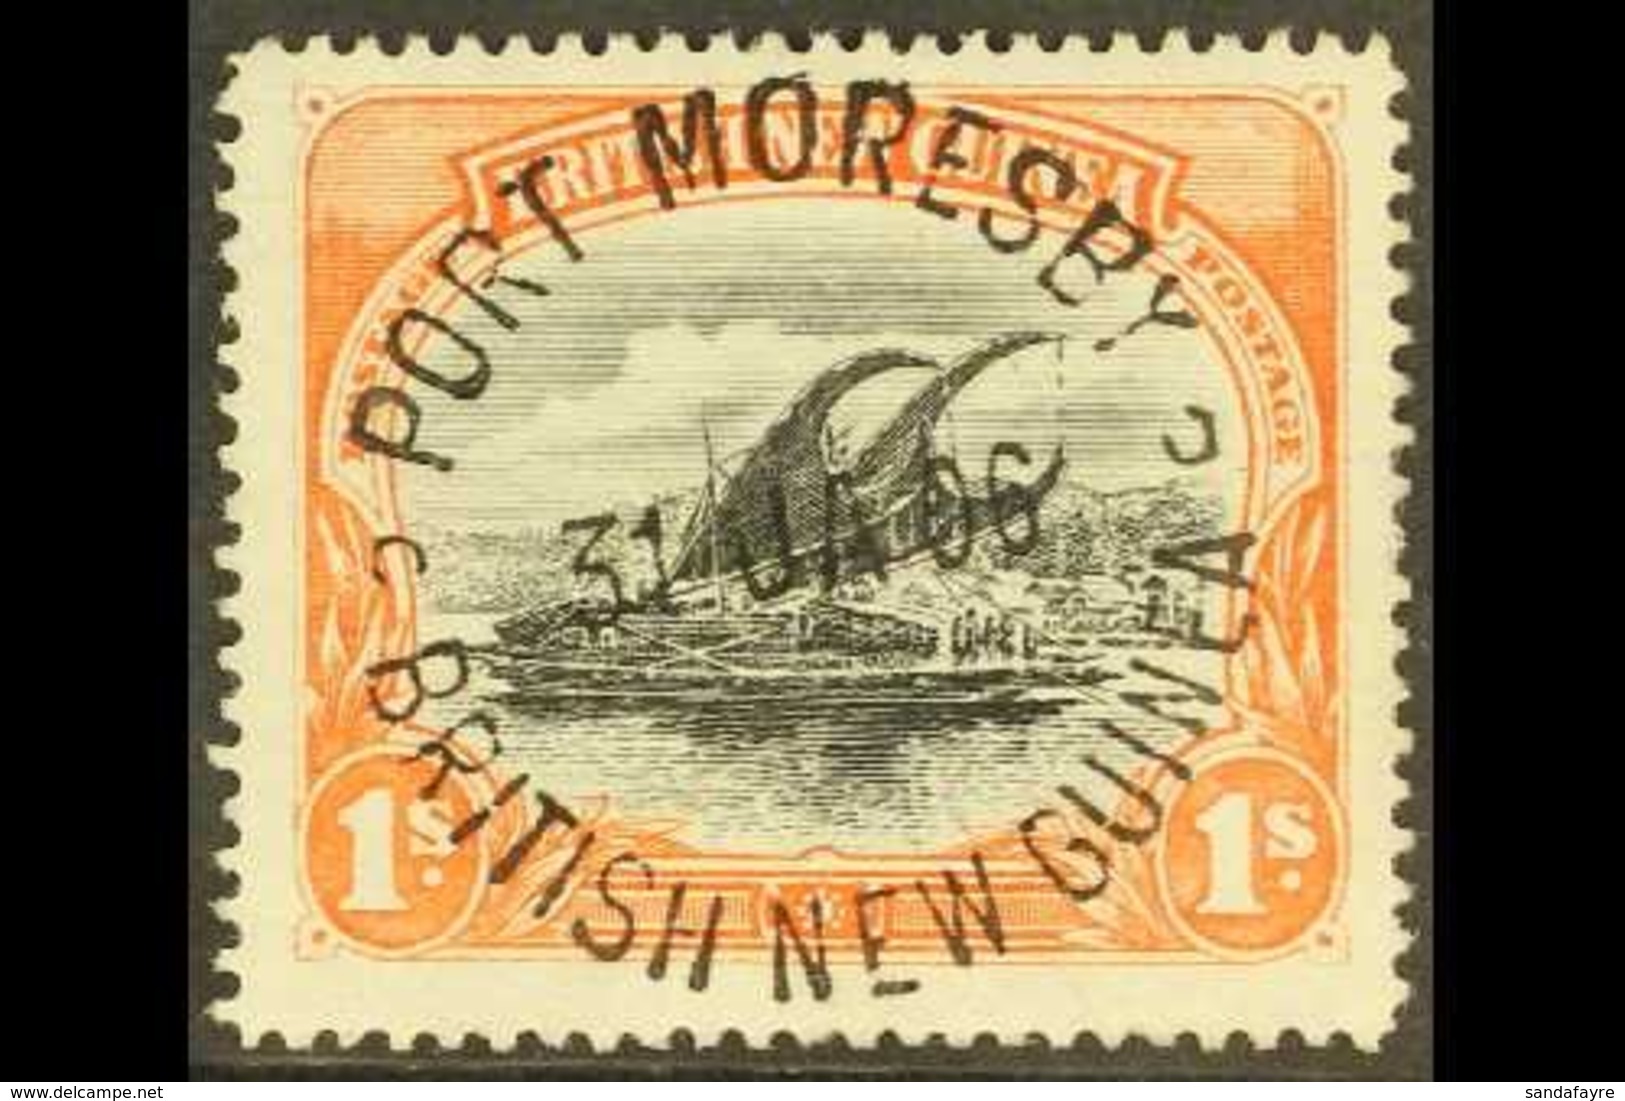 1901-05  1s Black And Orange Lakatoi, SG 7, Superb Full Upright Port Moresby 31 Jan 1906 Cds. For More Images, Please Vi - Papua New Guinea